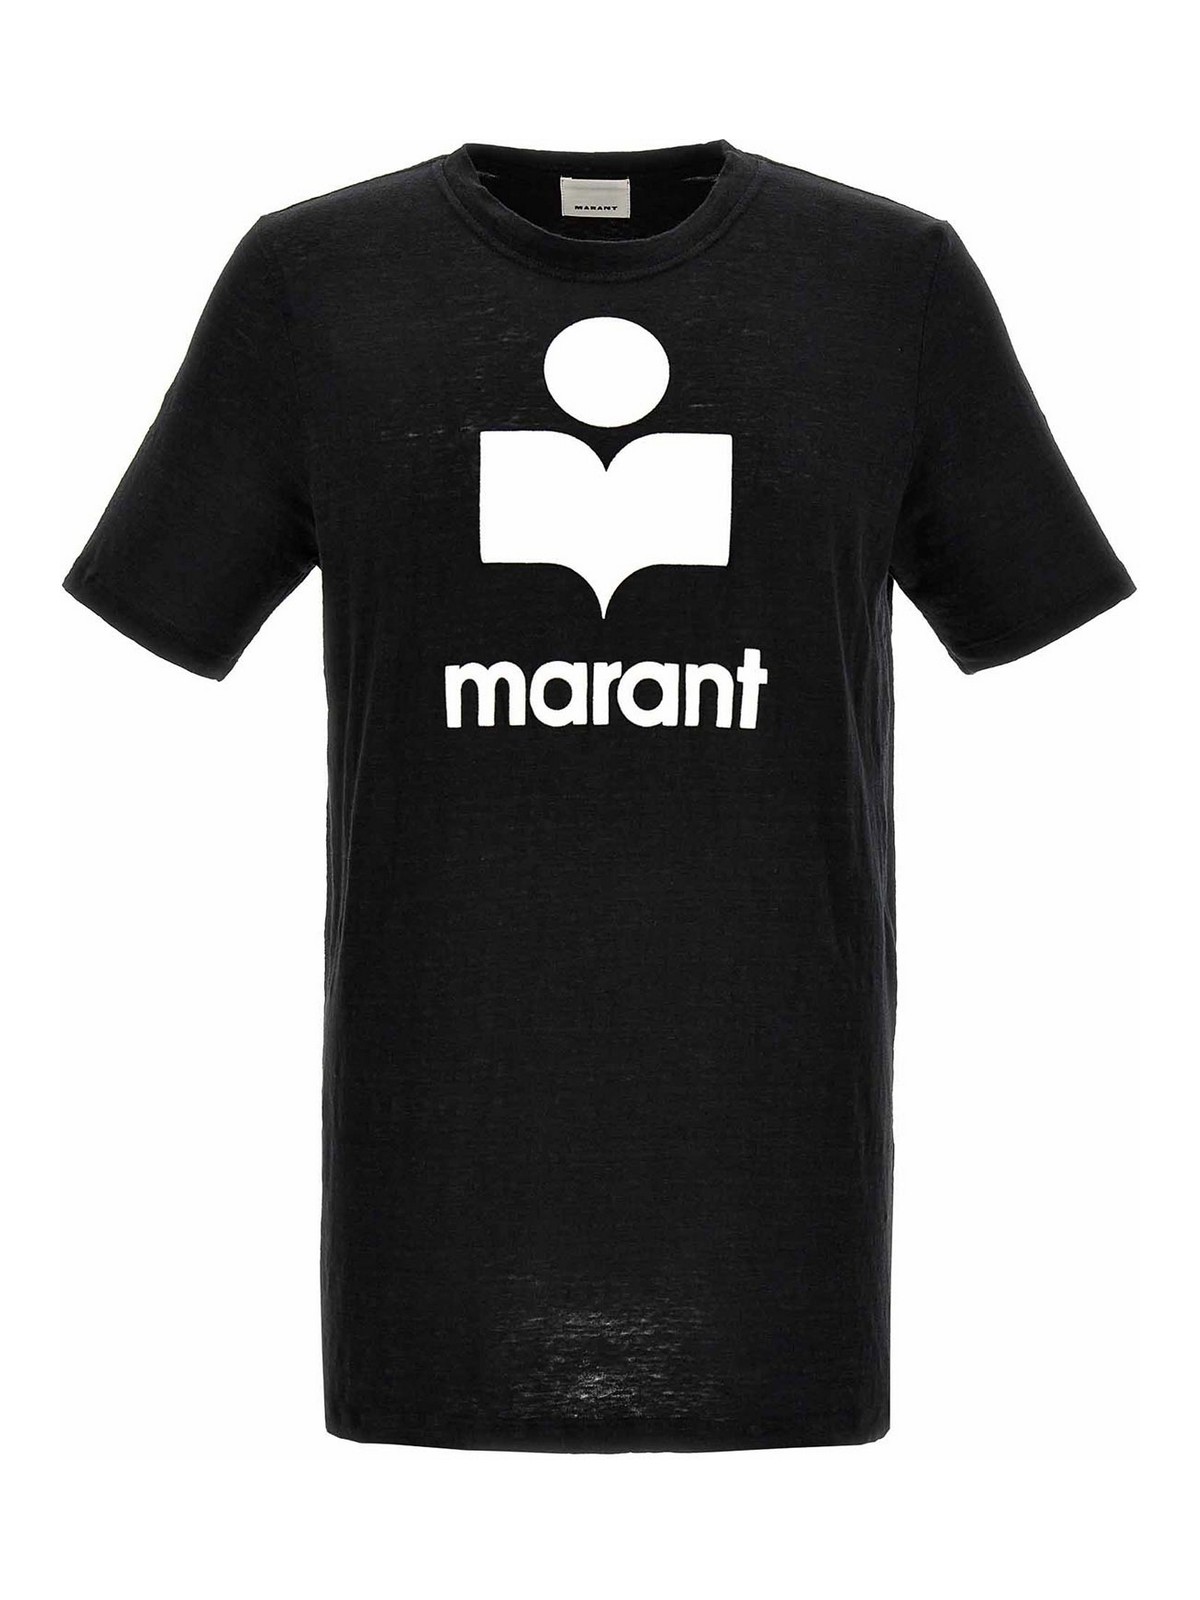 Isabel Marant Karman T-shirt In White